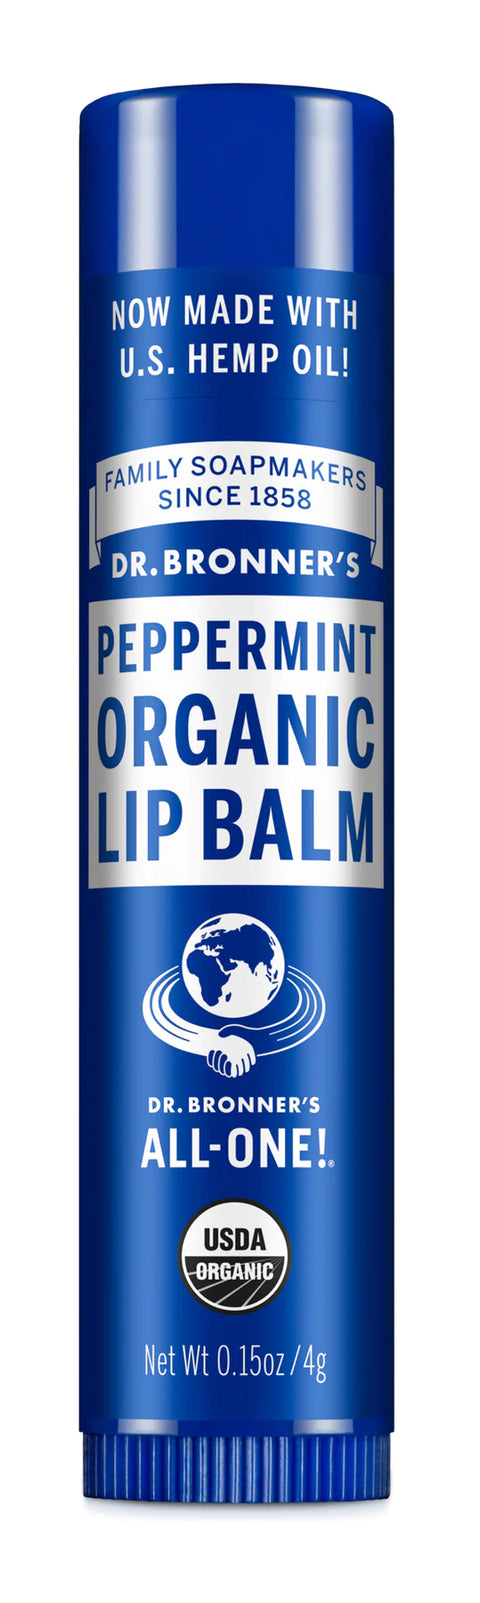 Dr. Bronner's Organic Lip Balm, Peppermint